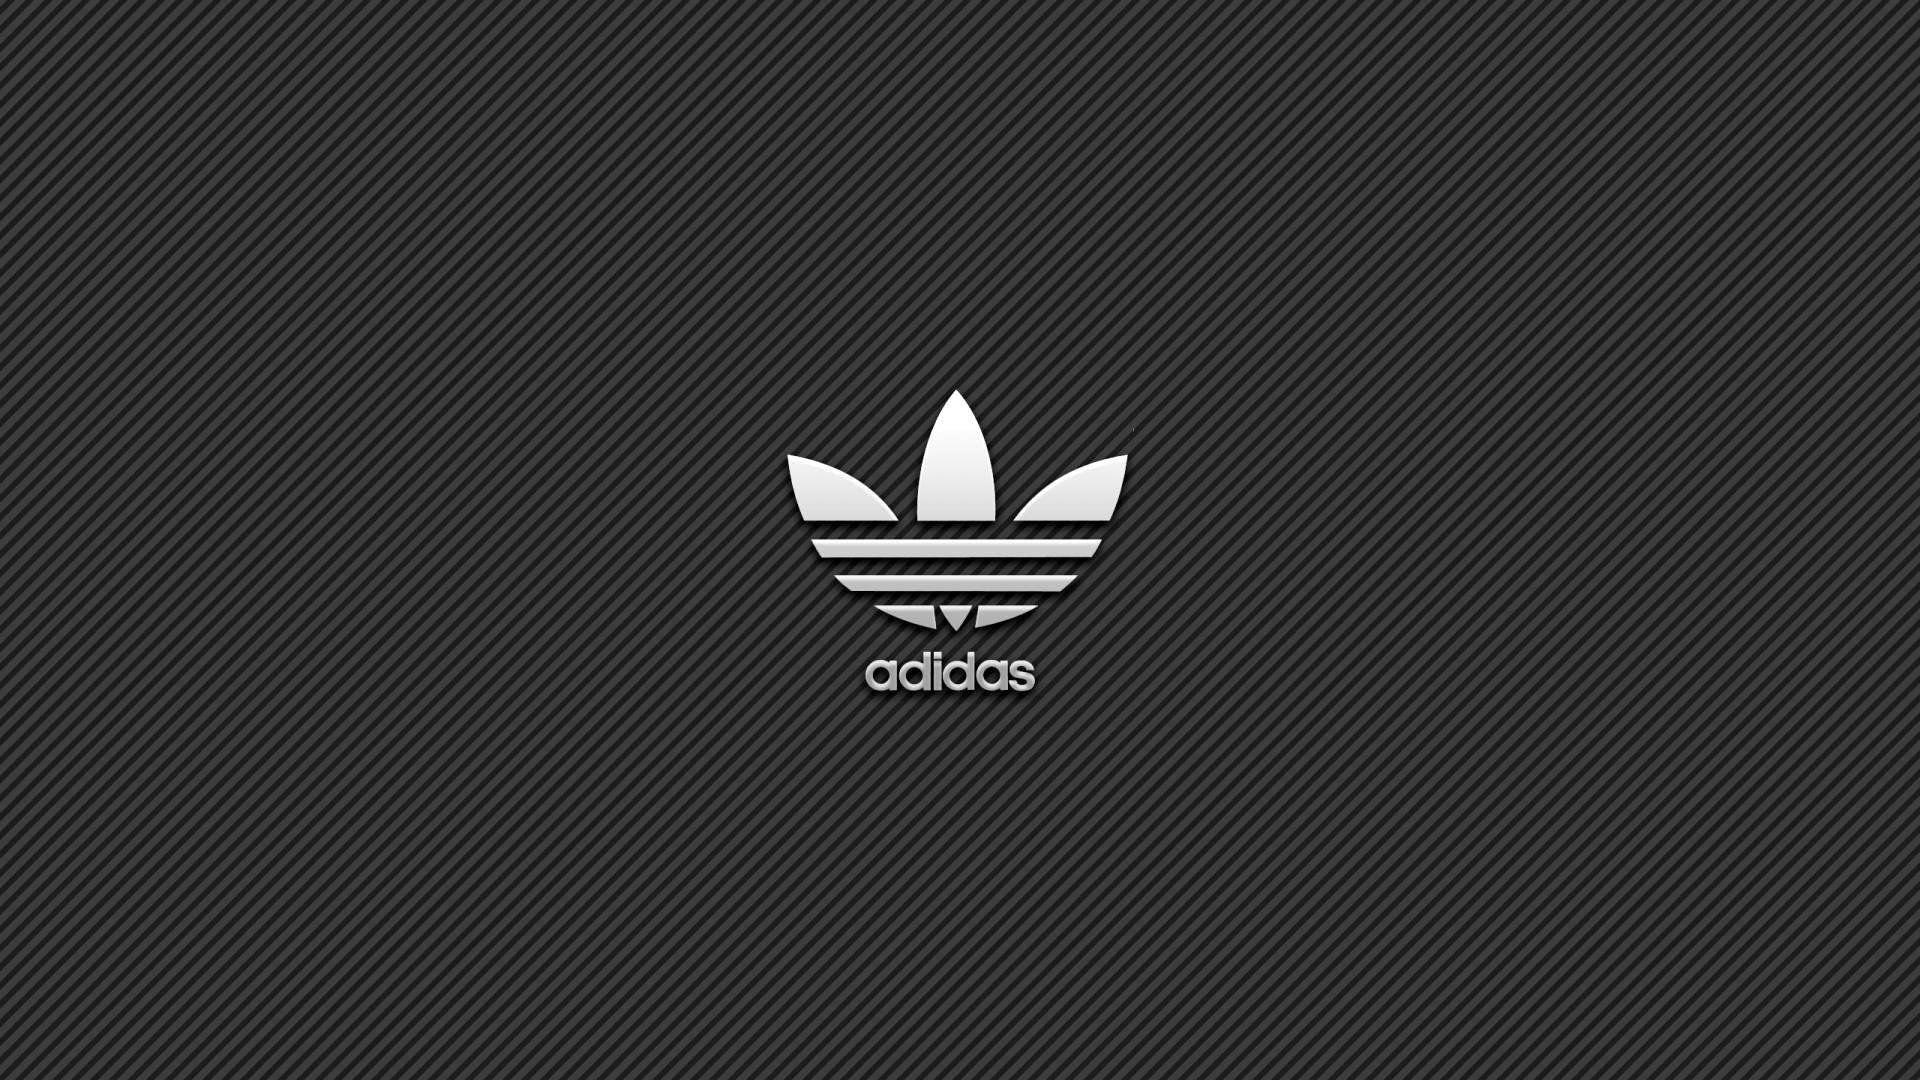 adidas originals logo wallpaper